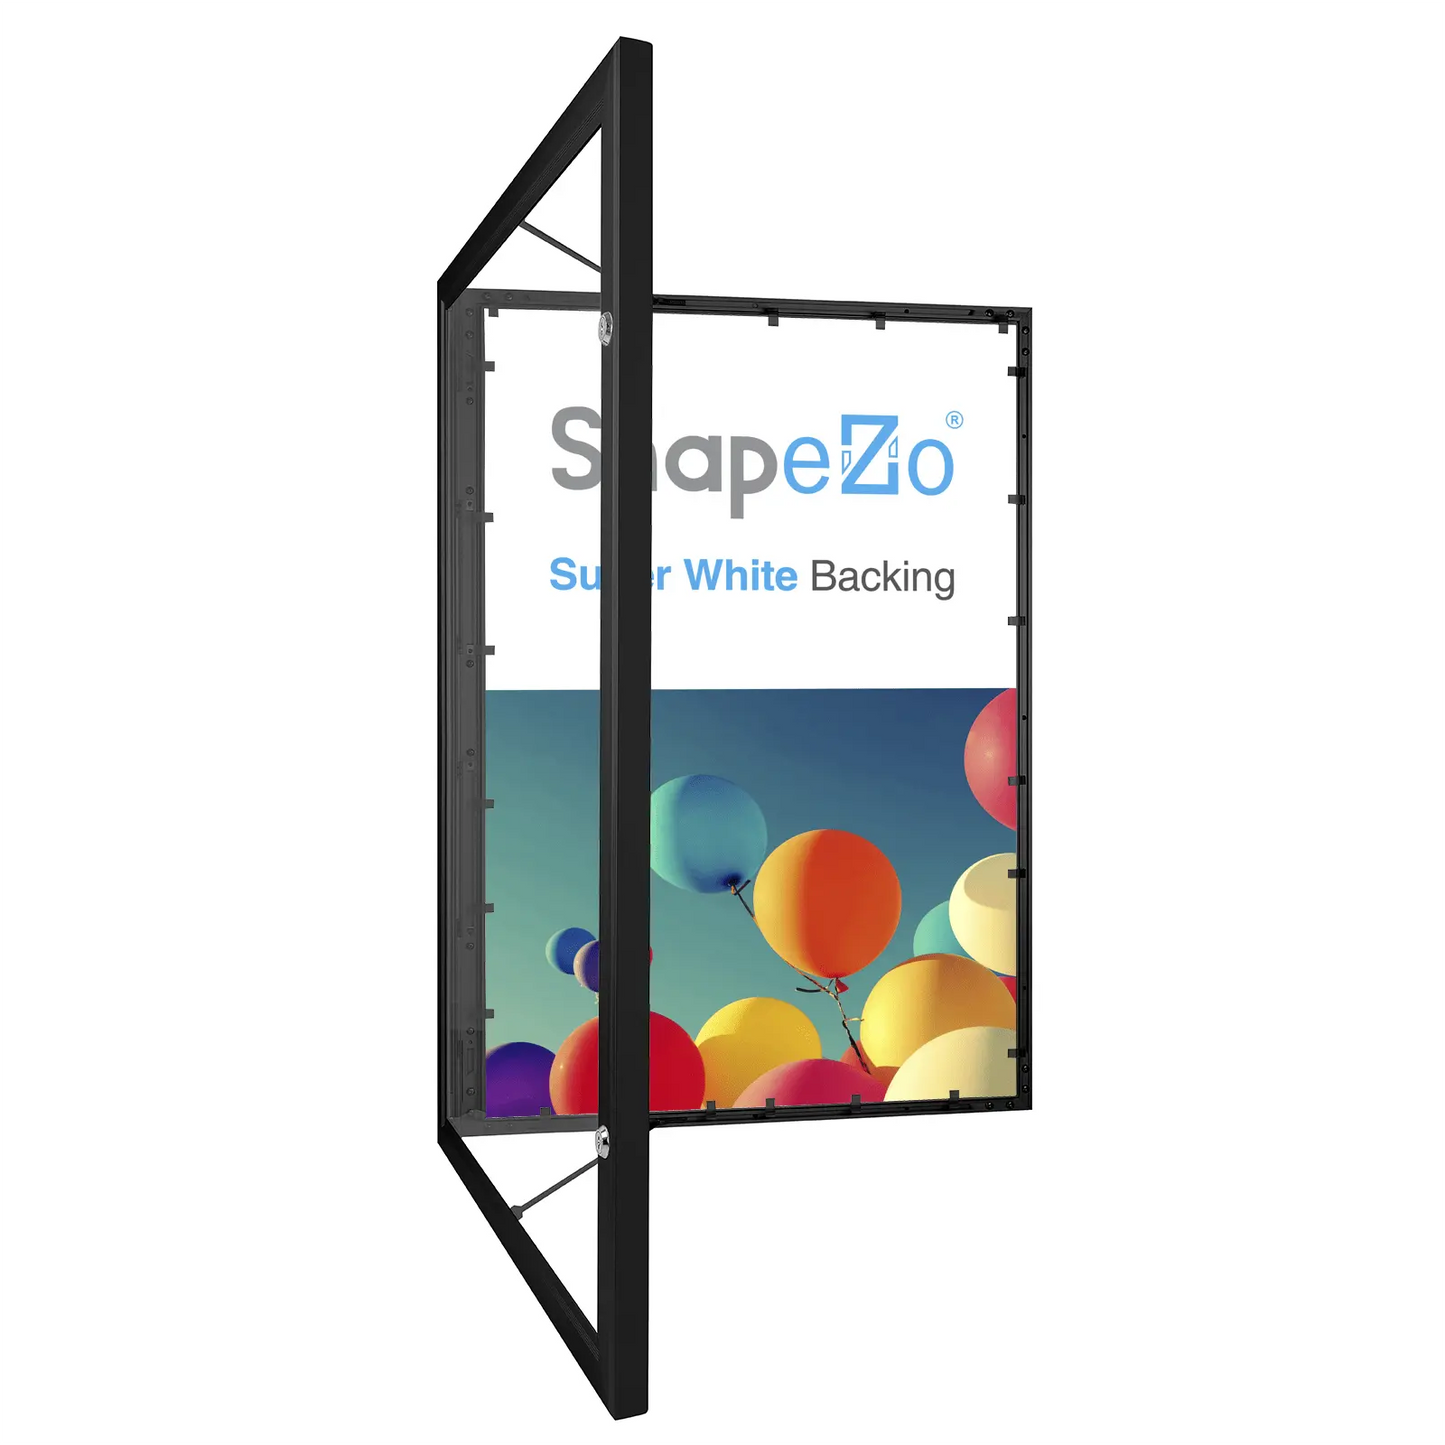 27x40 Black SnapeZo® Poster Case - 1.77" Profile - Snap Frames Direct